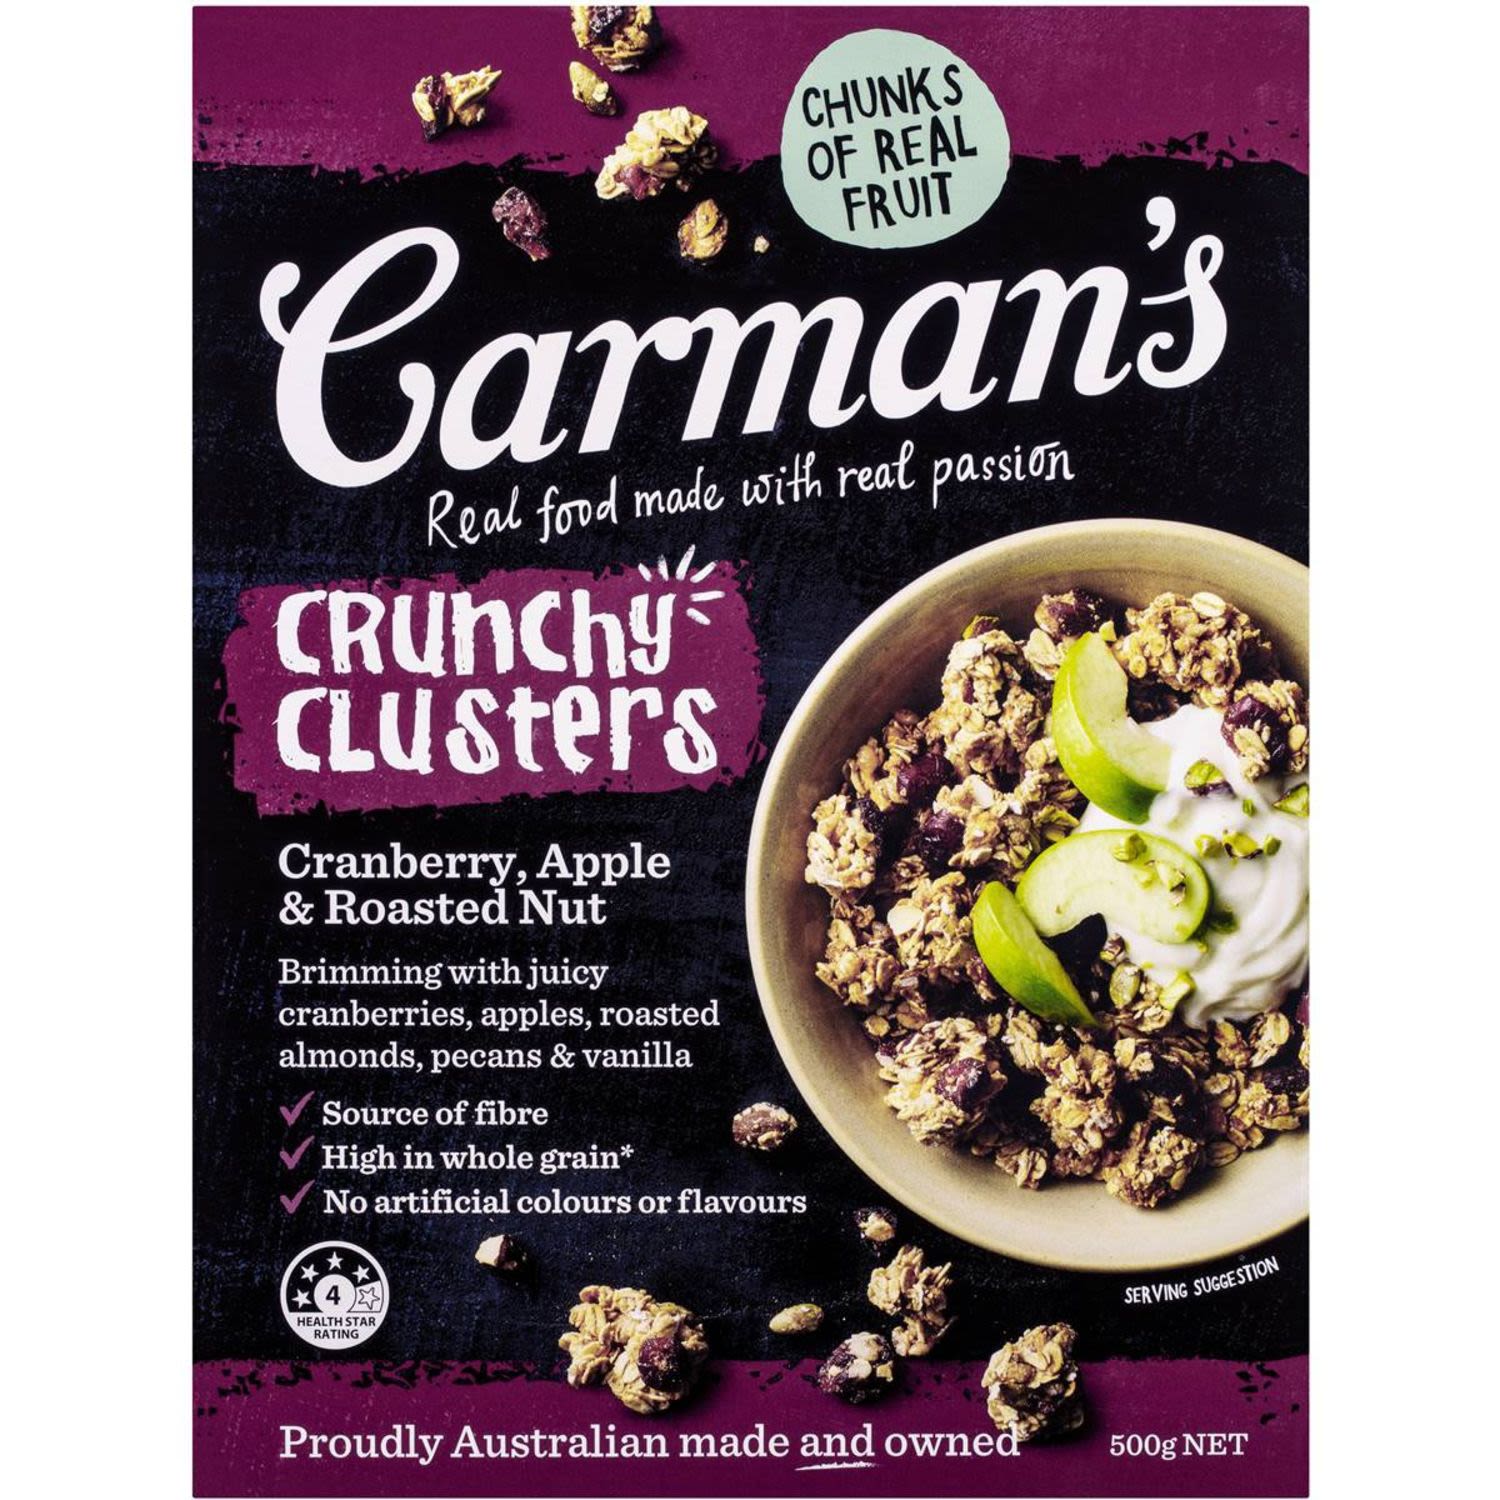 Carman's Cranberry, Apple & Roasted Nut Crunchy Clusters, 500 Gram